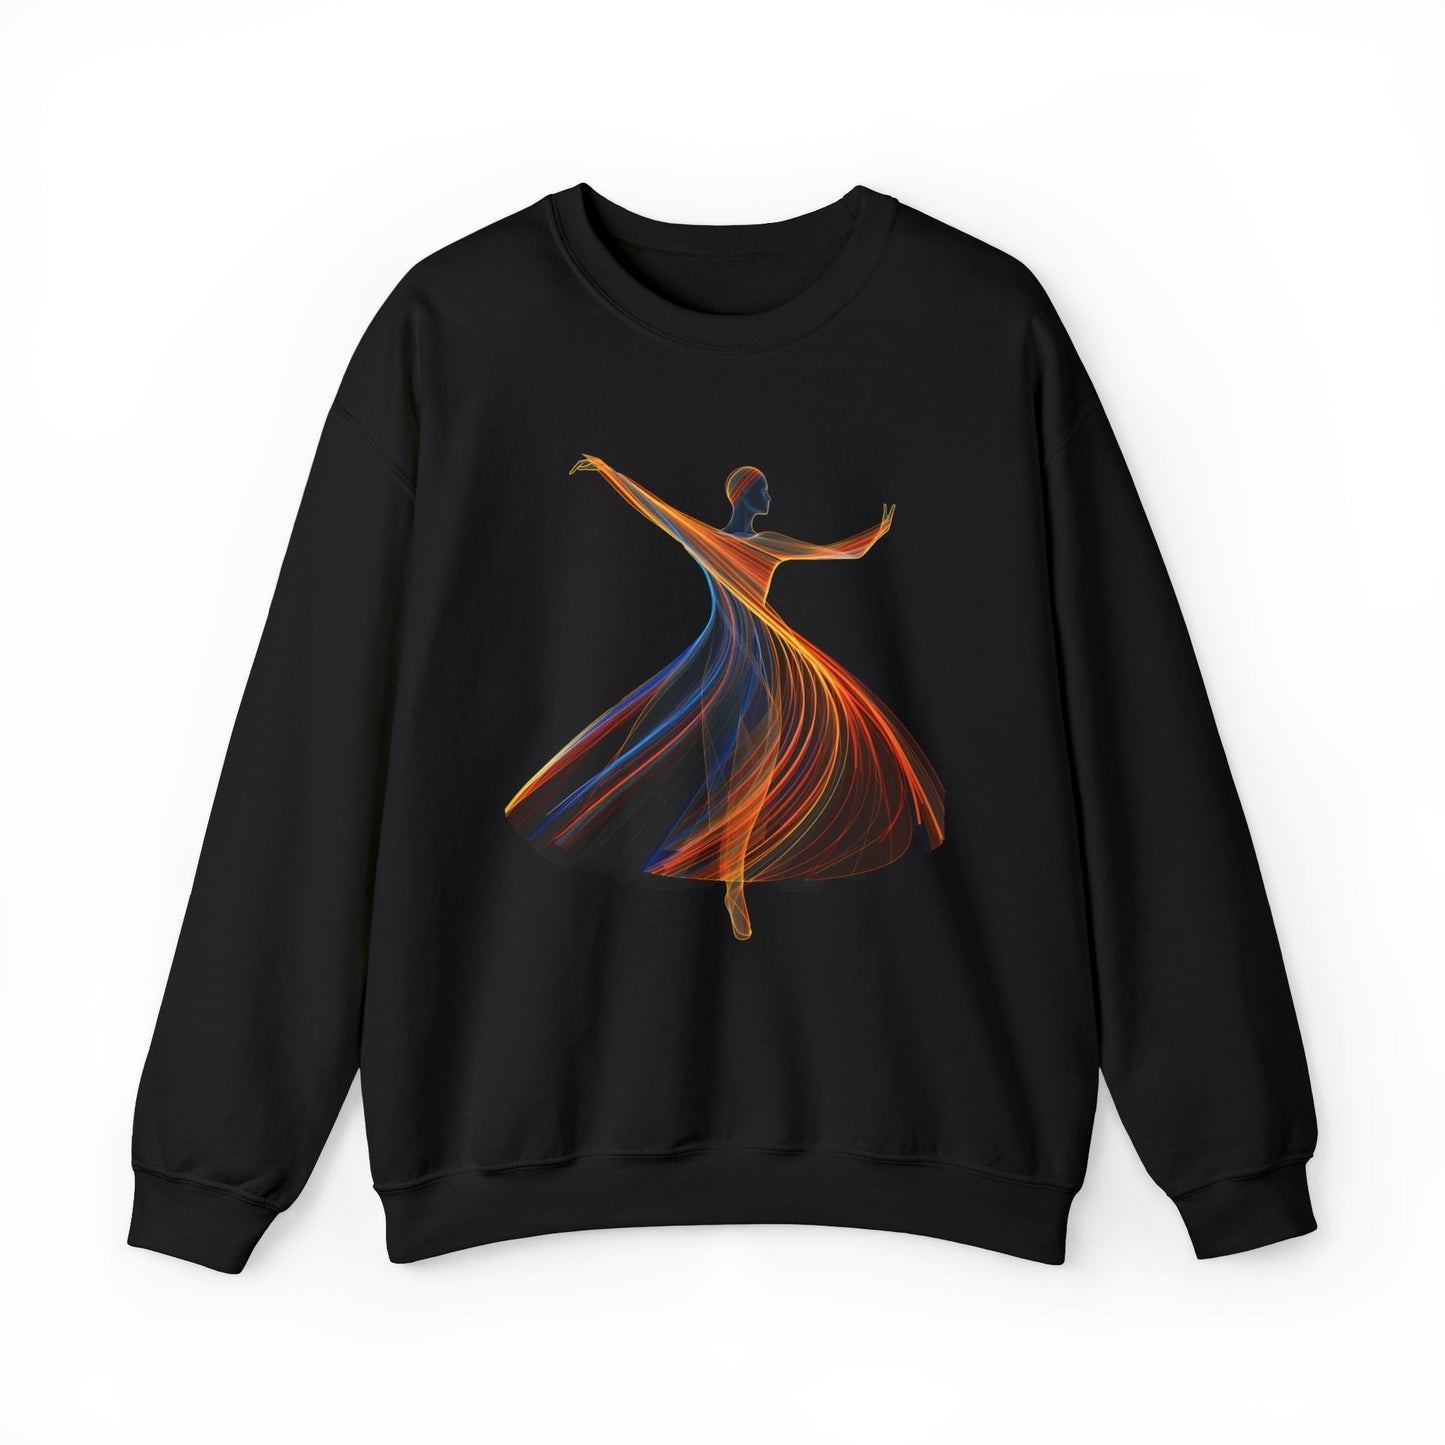 Dancer Sweatshirt - A Beautiful Dancer on Black Sweater, Brilliant Color and Emotion, Adult-Youth, Dance Lover, Dancer Shirt, Gift for Dance - FlooredByArt